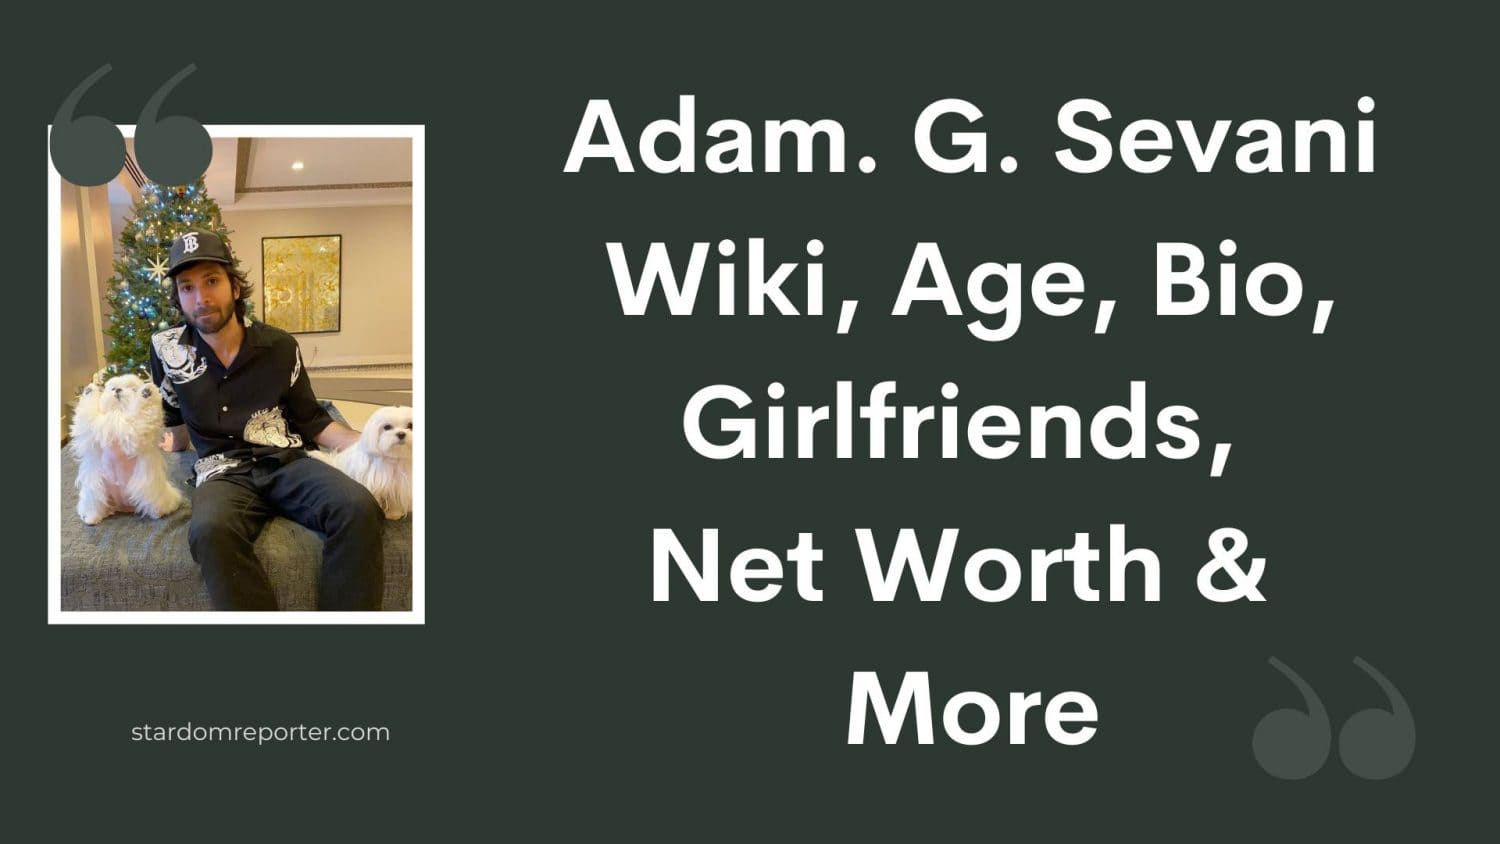 Adam. G. Sevani Wiki, Age, Bio, Girlfriends, Net Worth & More - 25